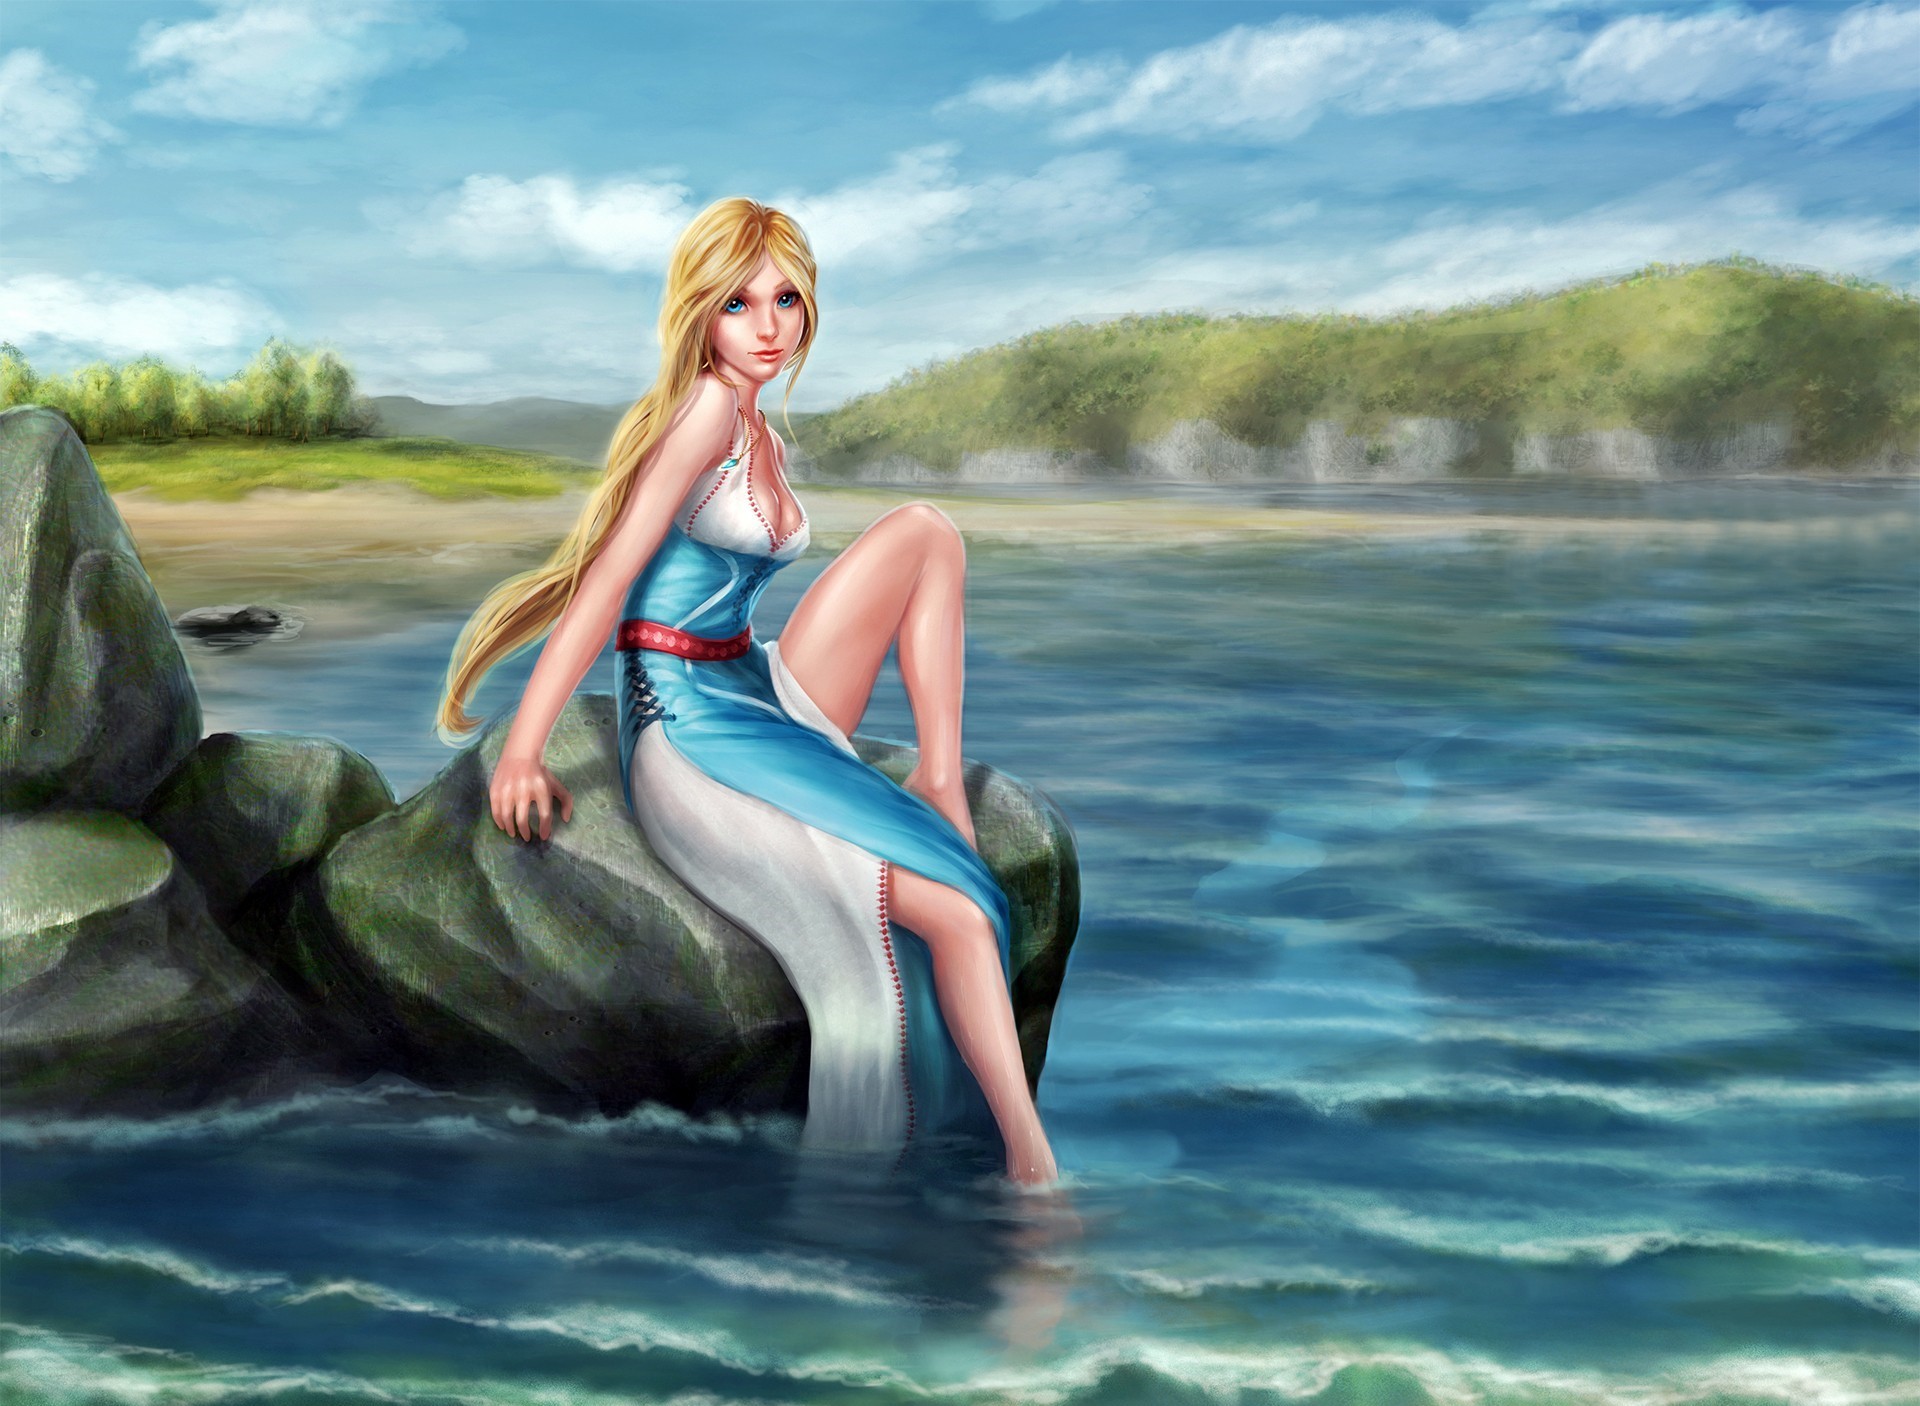 General 1920x1406 fantasy art artwork blonde blue eyes long hair women outdoors water nature landscape fantasy girl